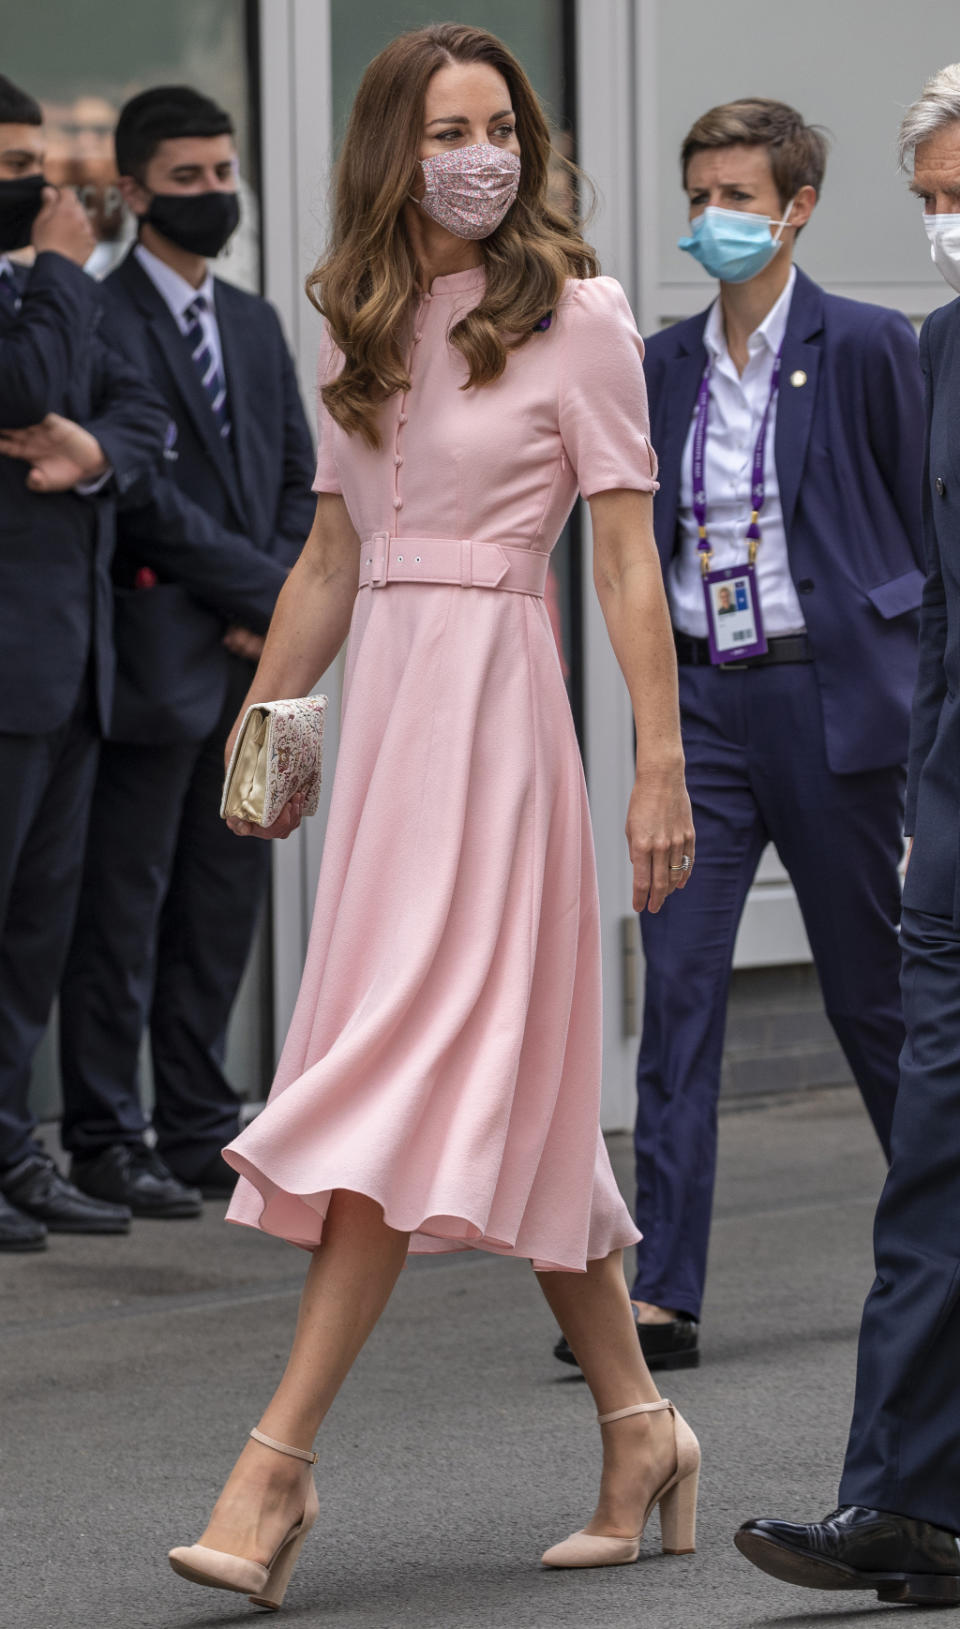 Kate Middleton at Wimbledon on July 11. - Credit: MEGA